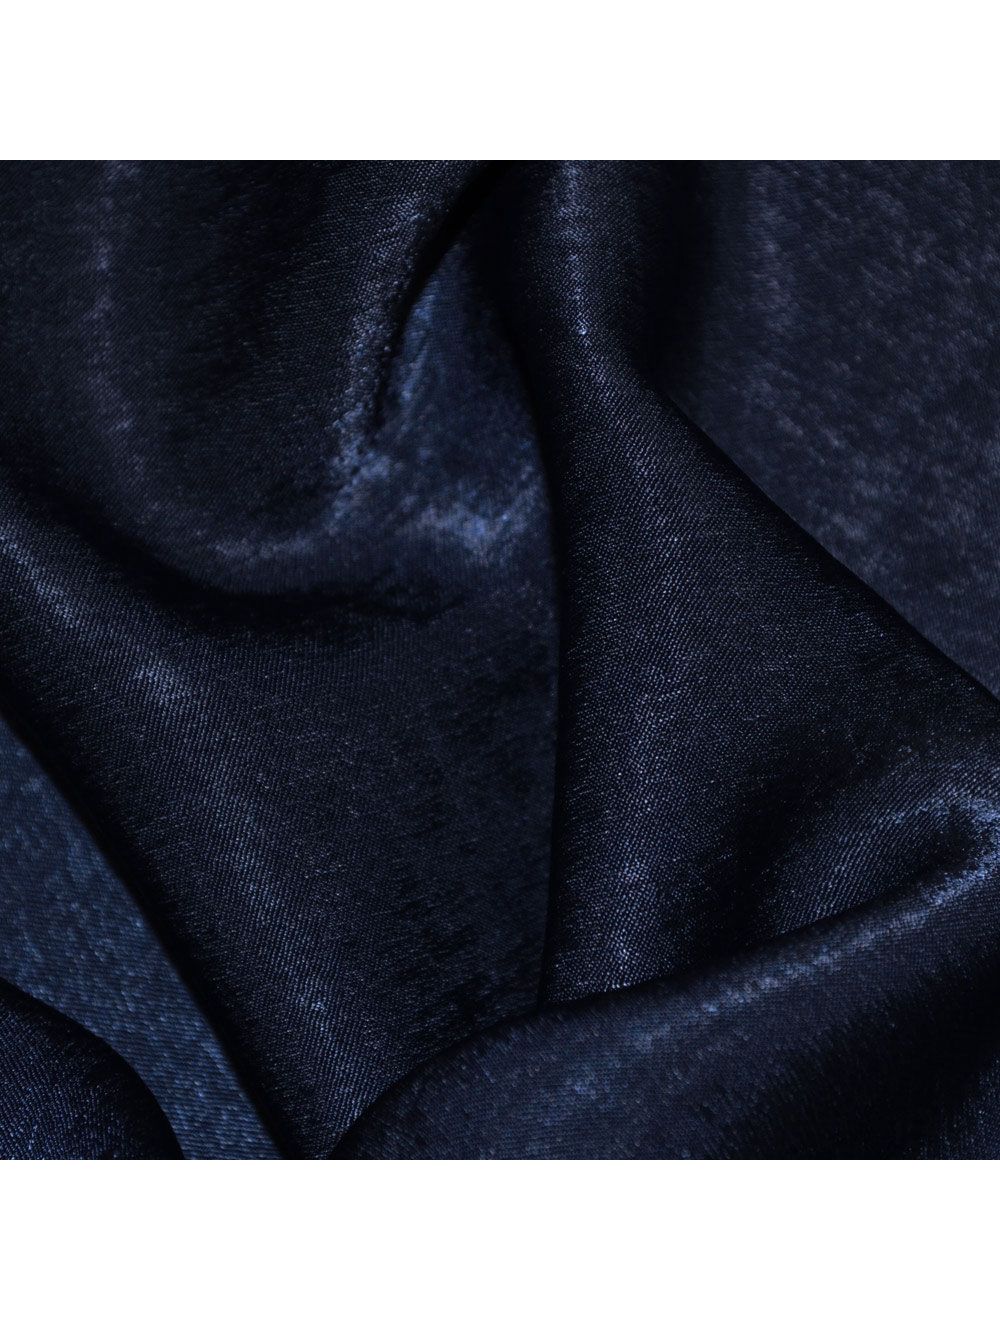 Navy Silk Velvet Satin Fabric | UK Fabric Supplier | Calico Laine